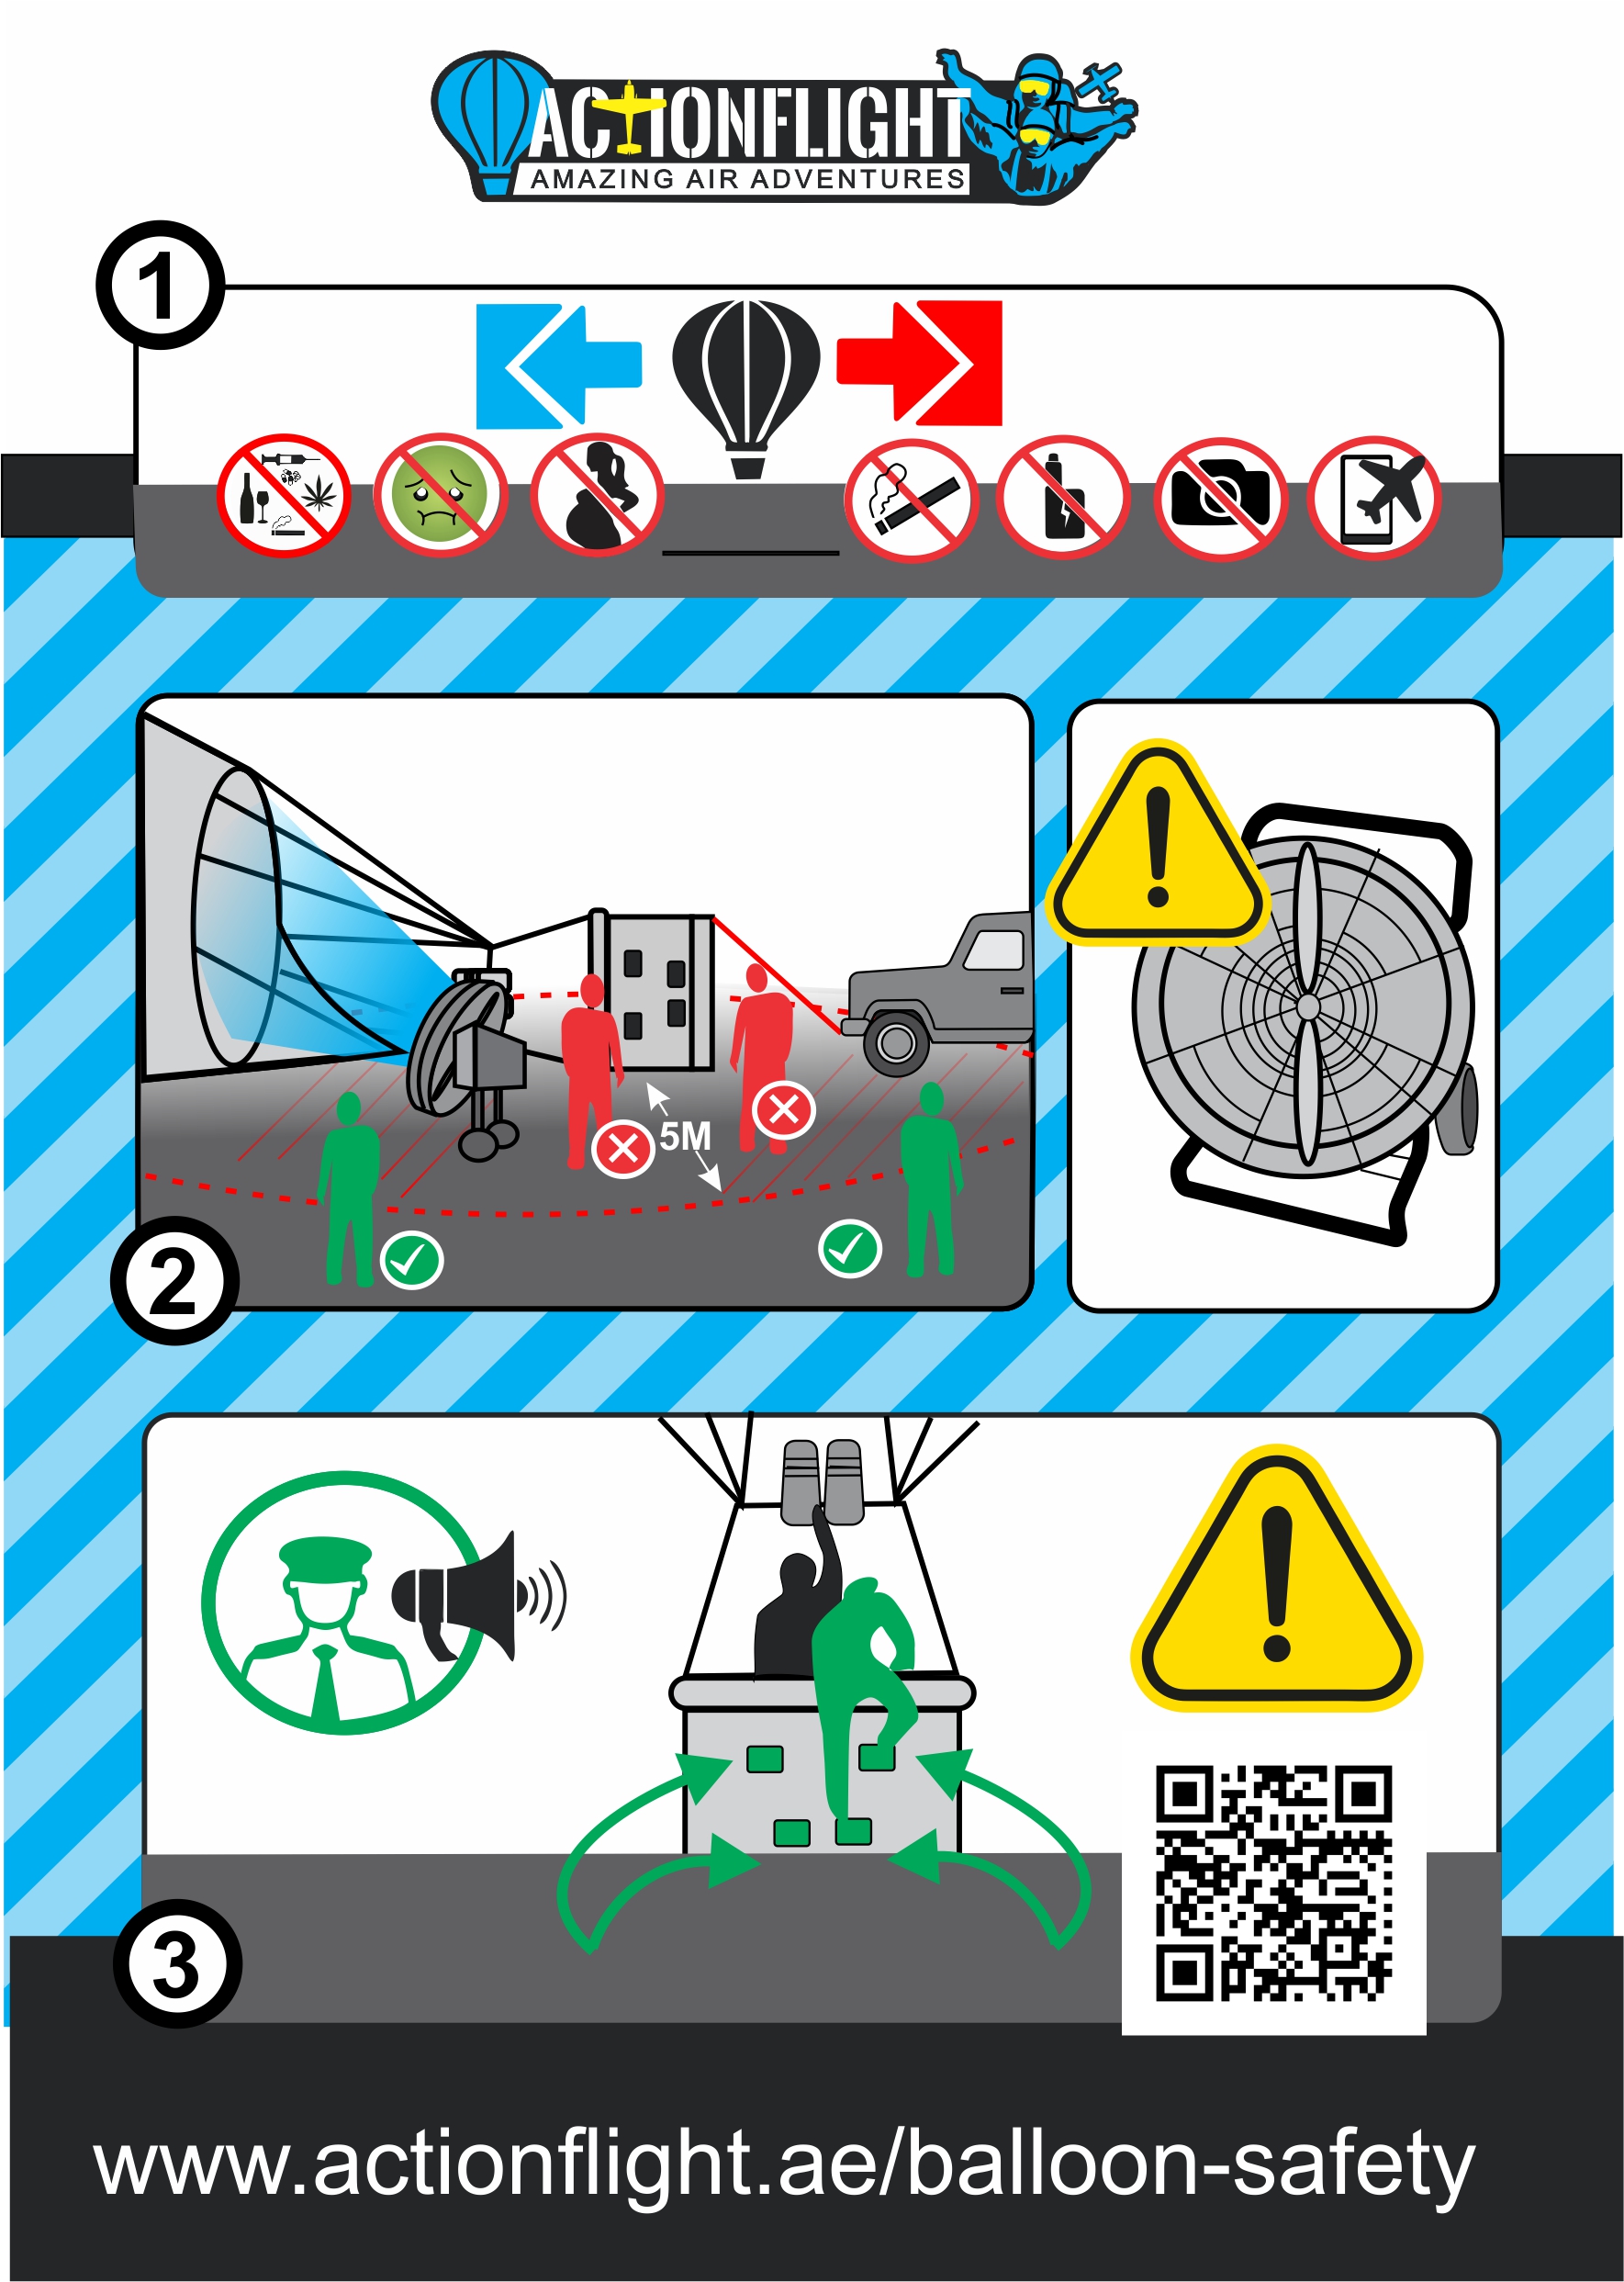 Passenger safety - Hot Air Balloons